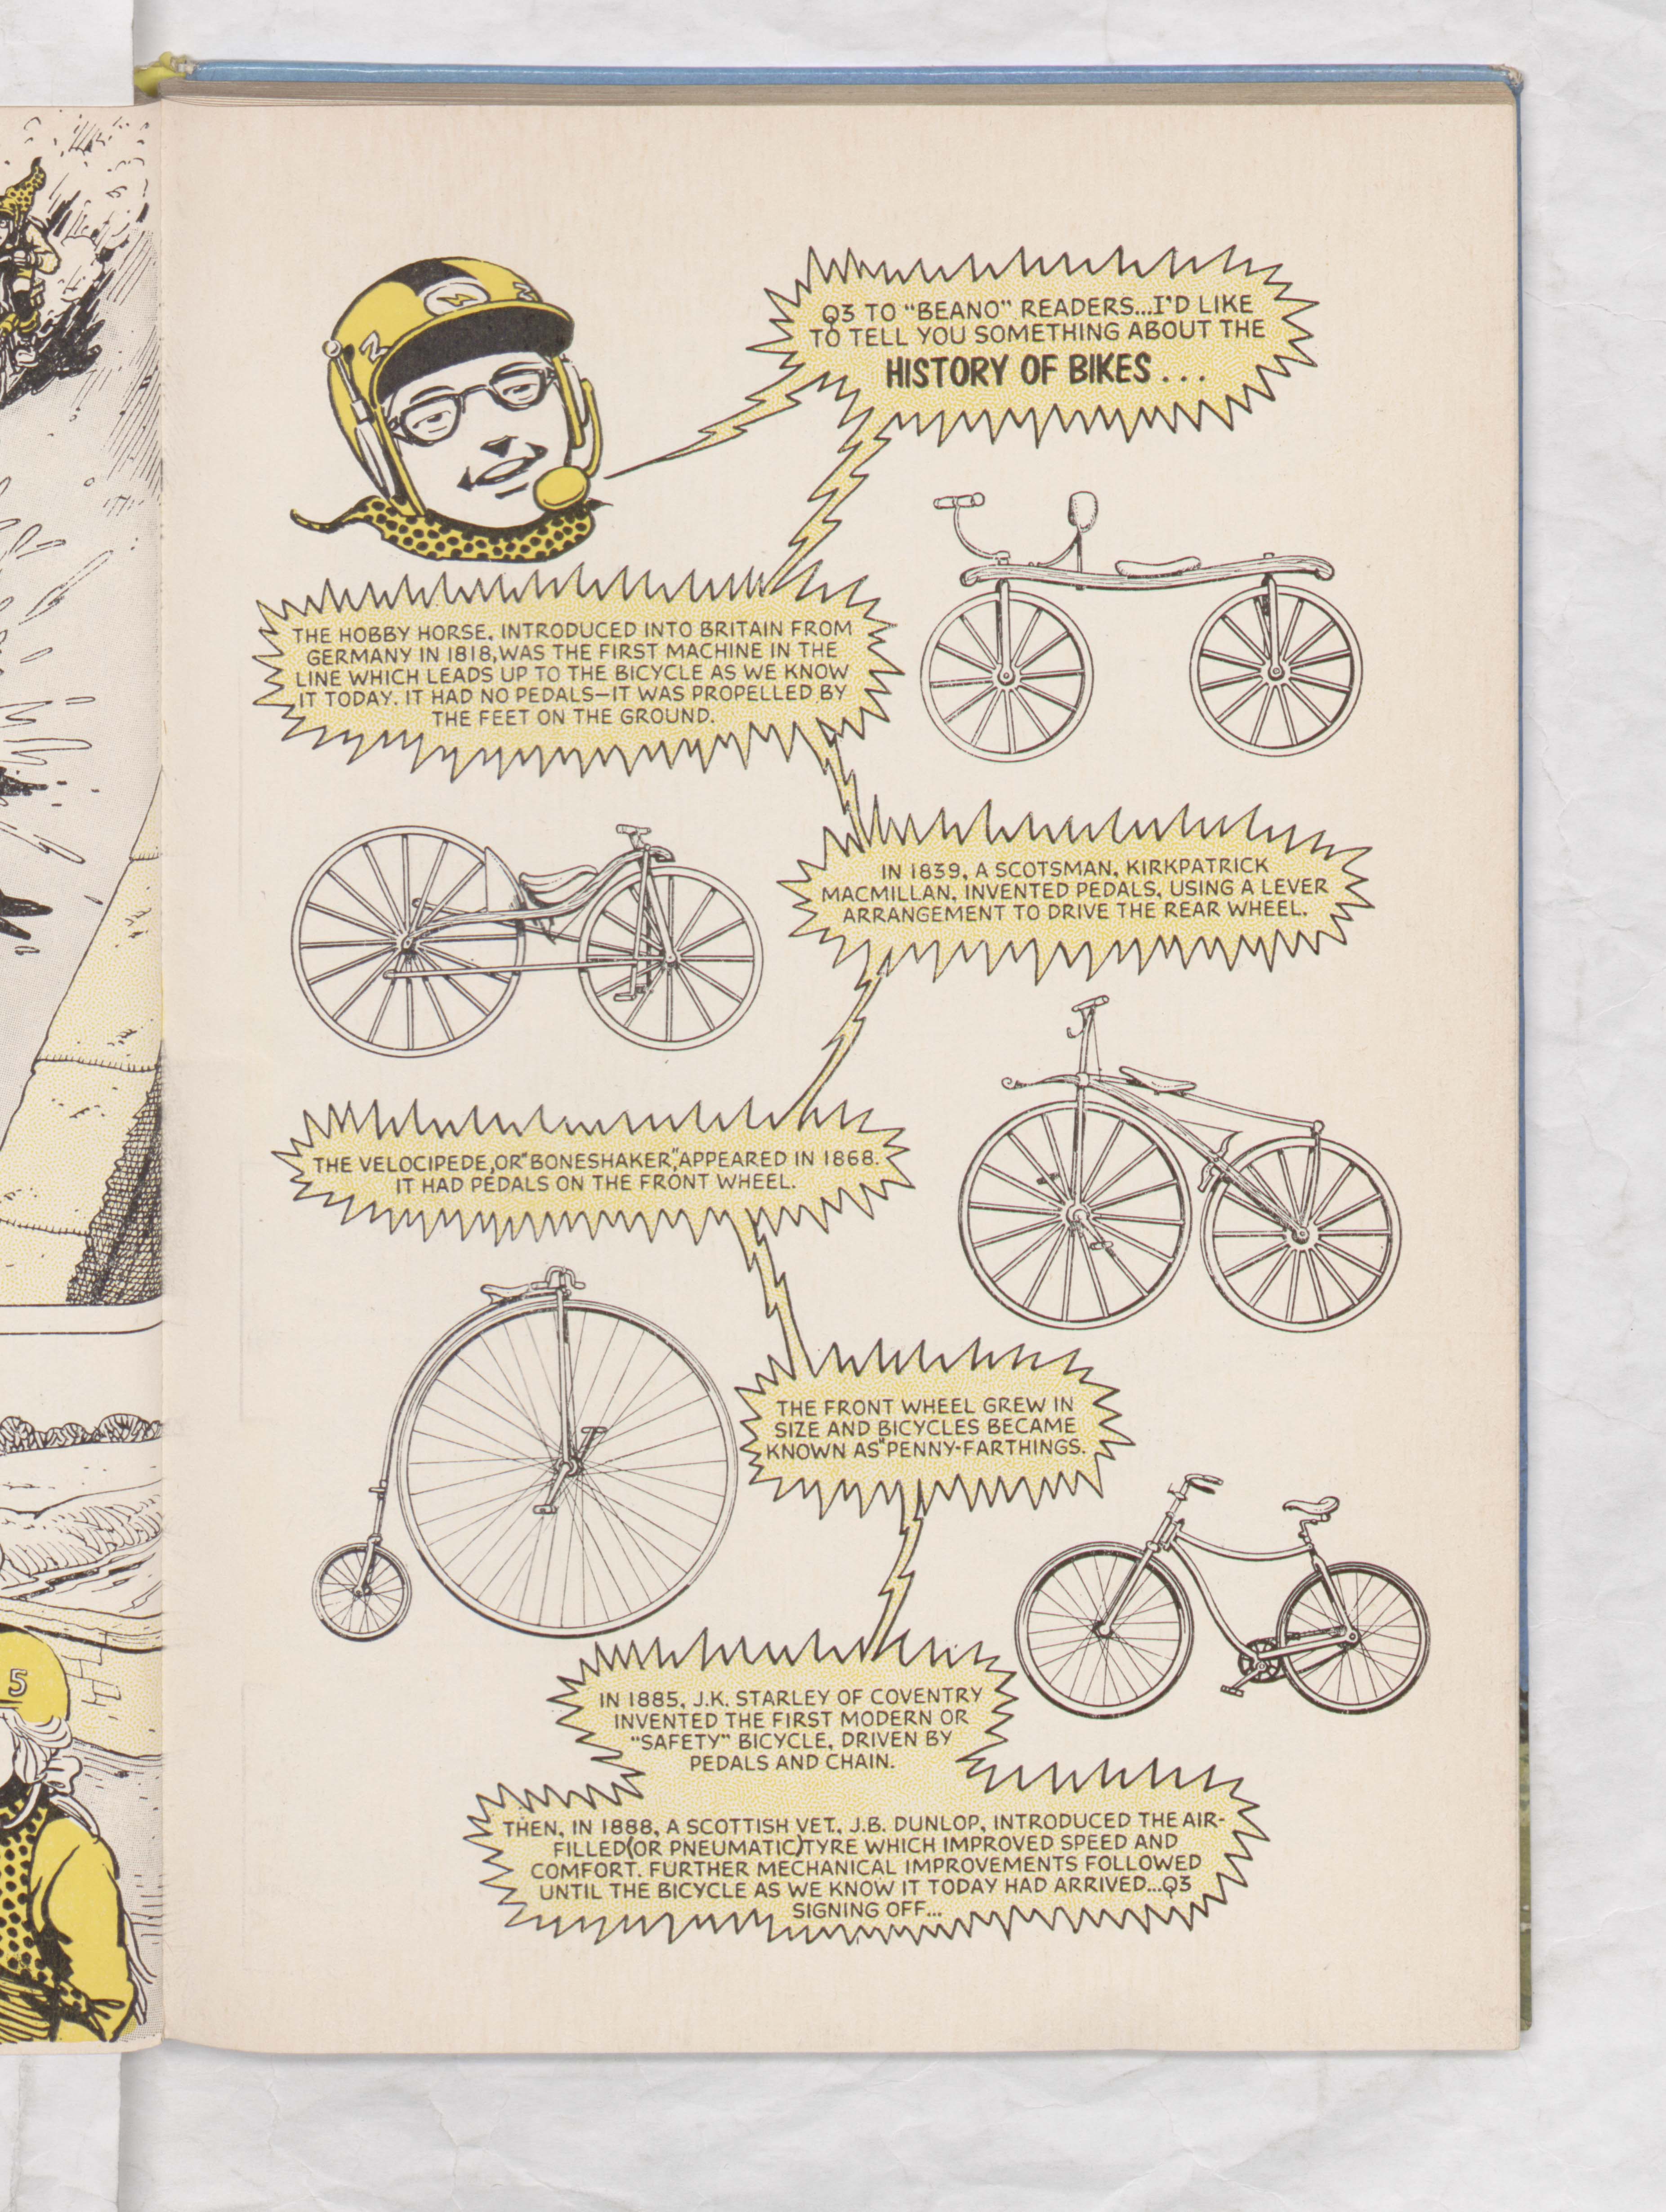 Beano Book 1970 - Q-Bikes - Page 11 bike history